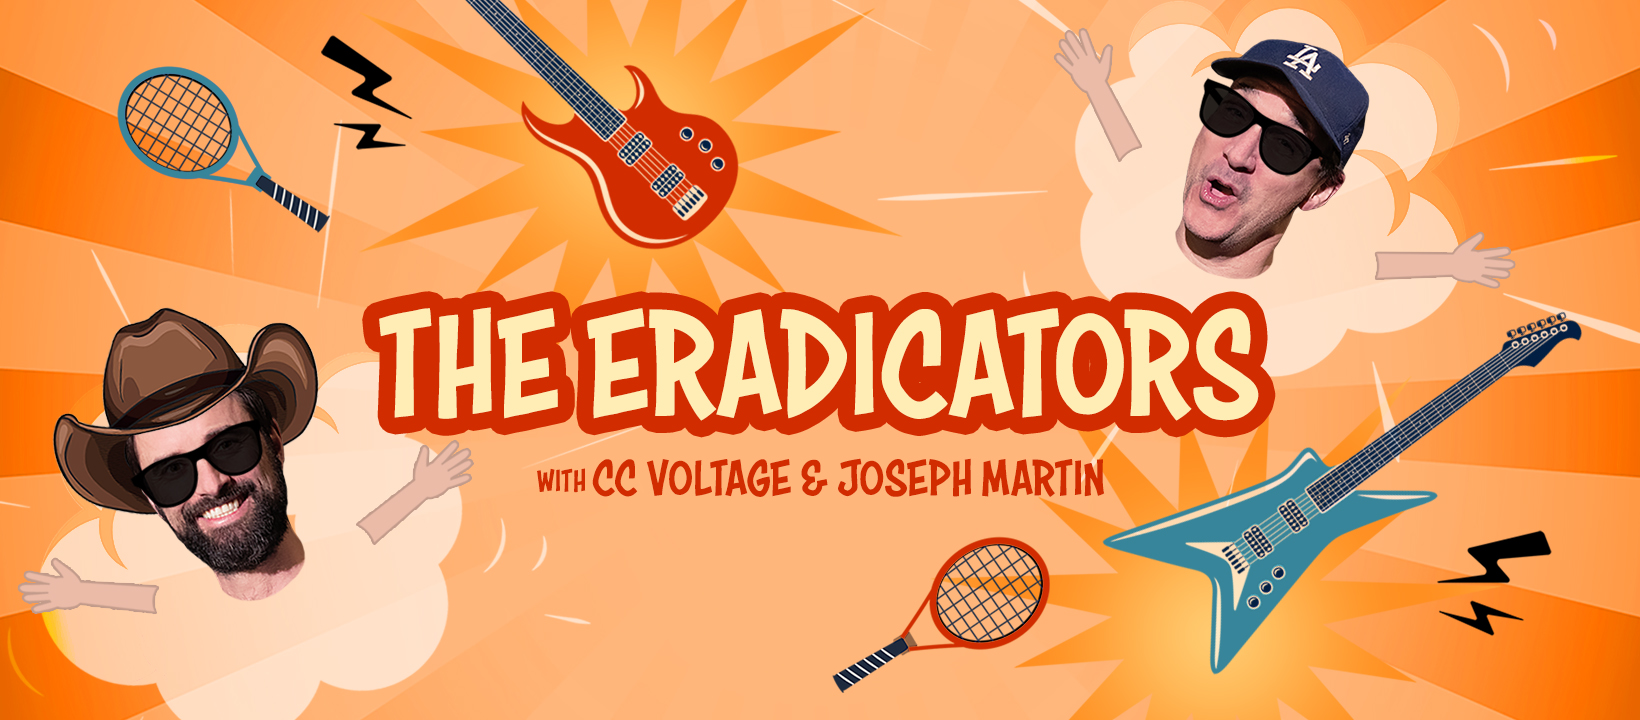 The Eradicators Podcast